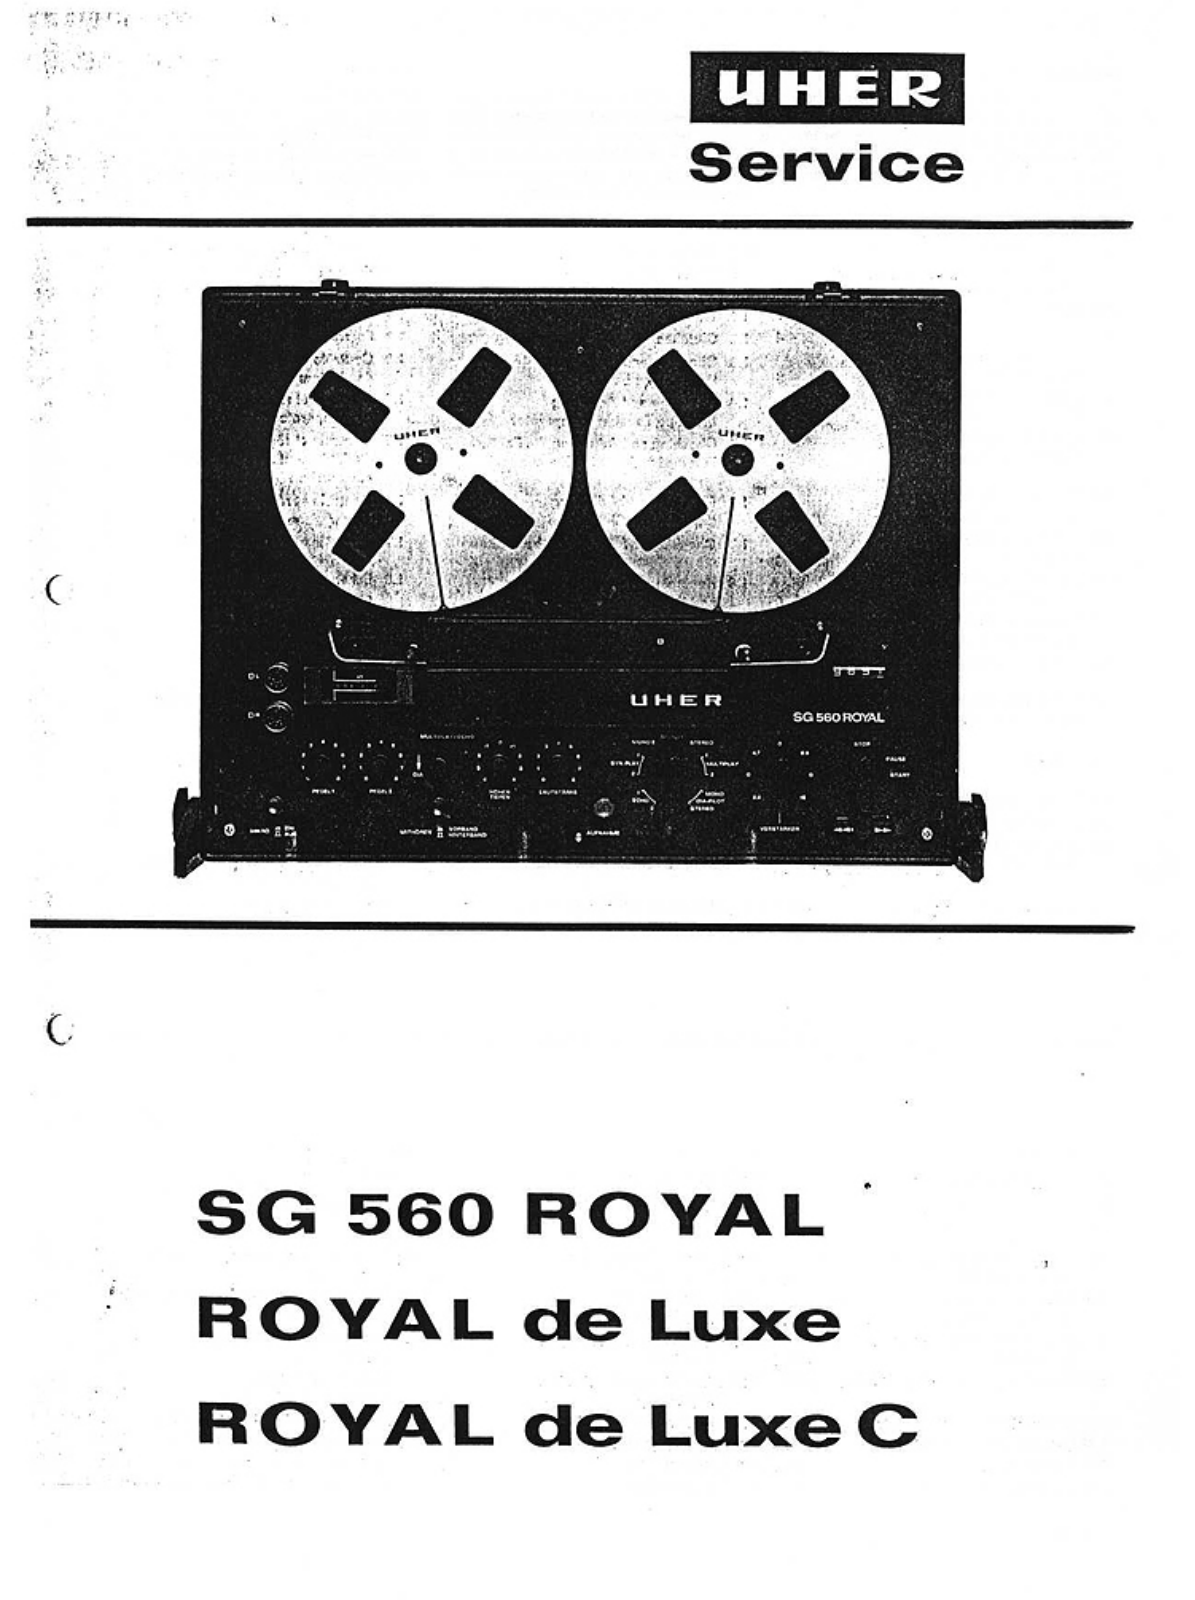 Uher Royal de Luxe C Service manual